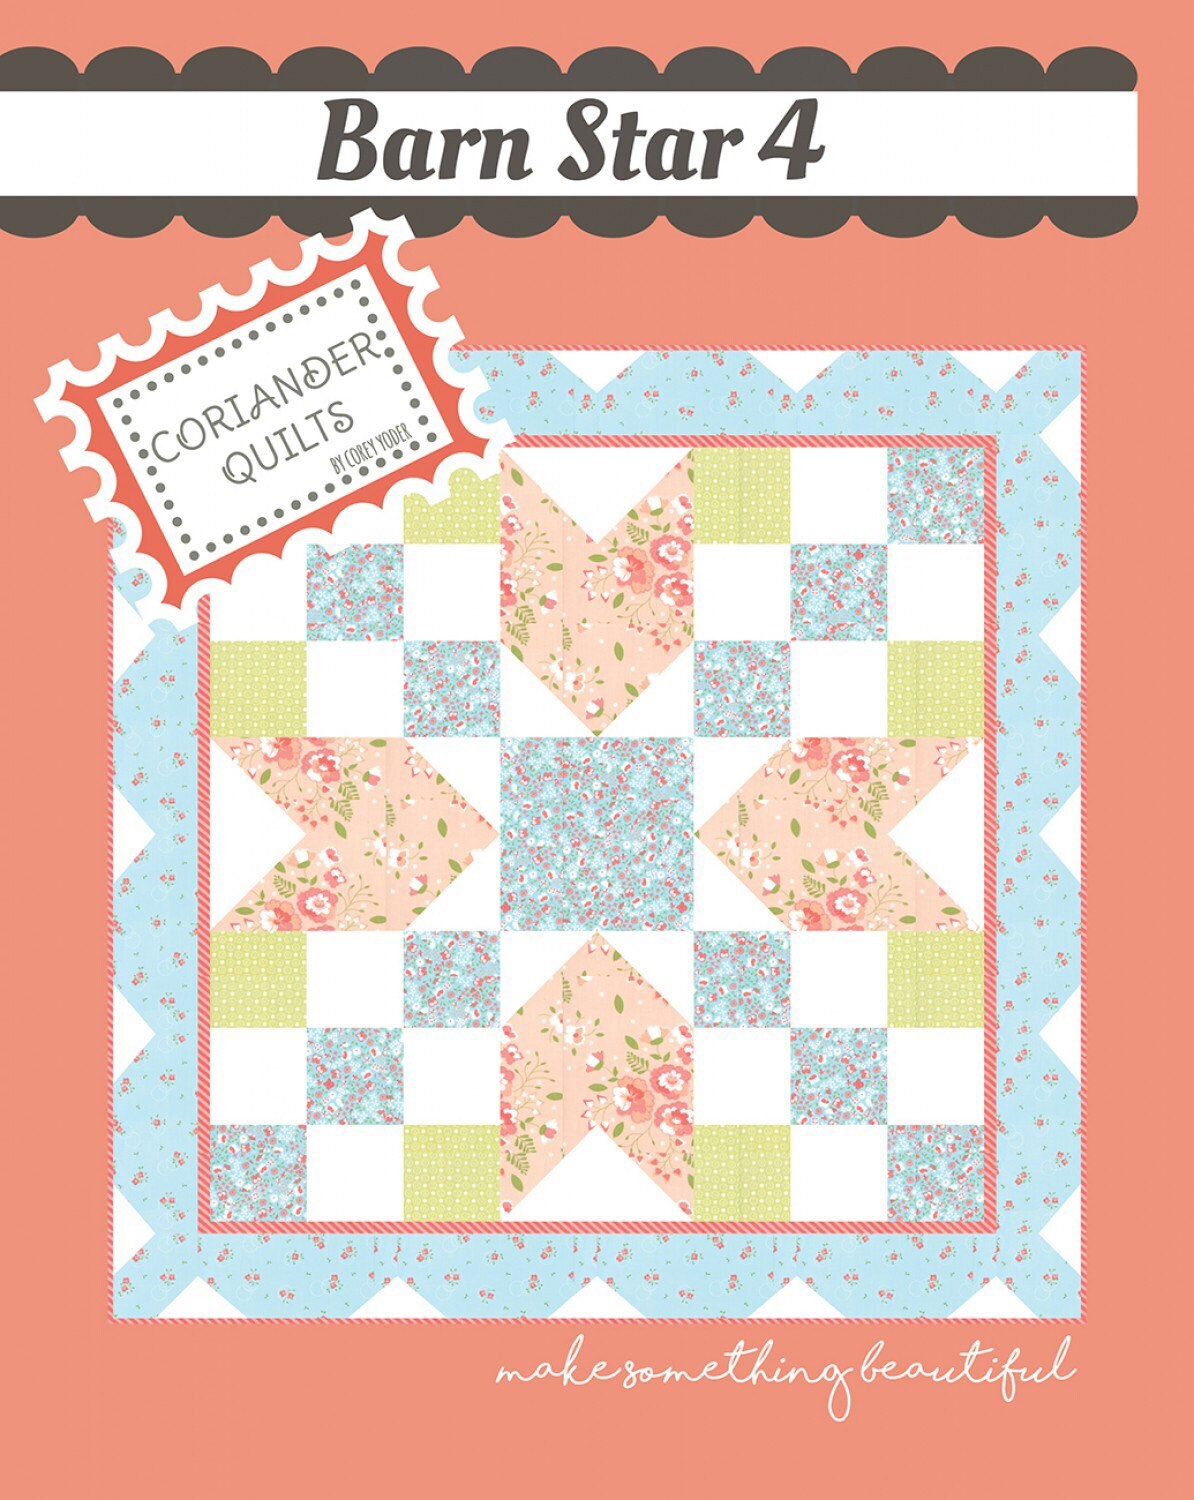 Barn Star 4 Quilt Pattern - Coriander Quilts - Corey Yoder